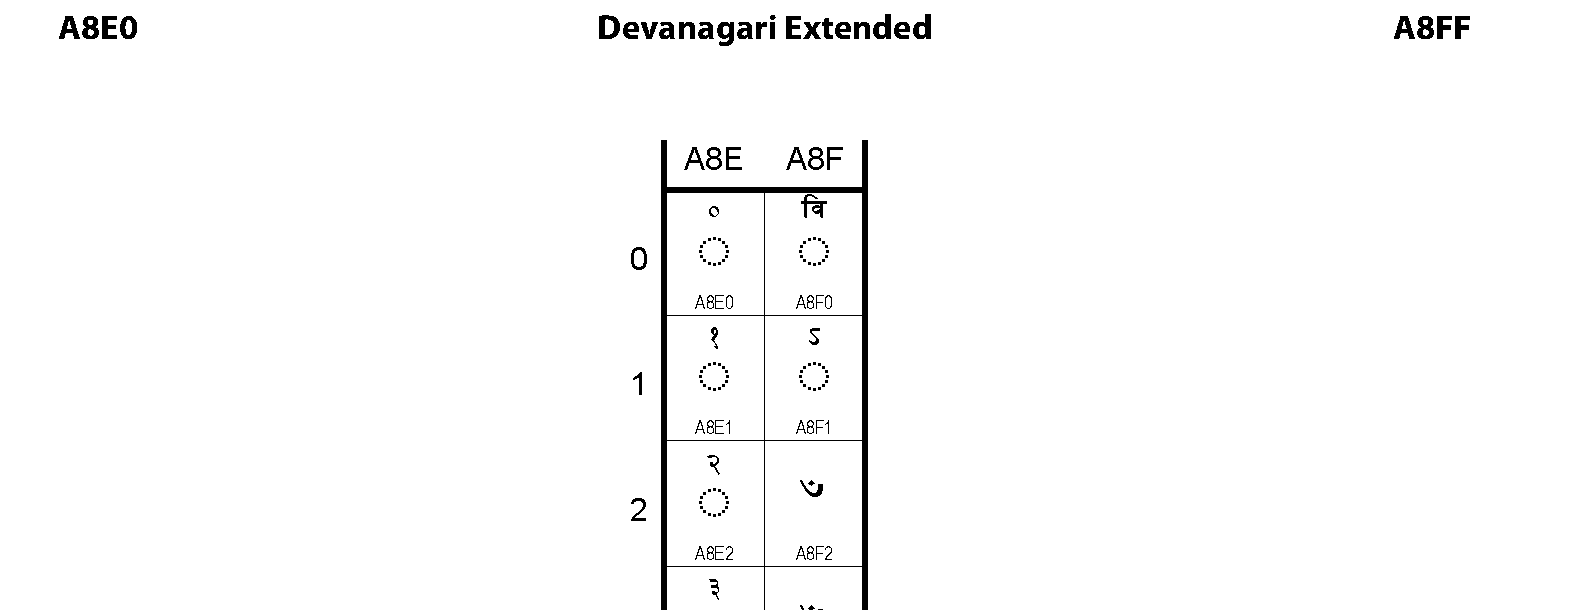 Unicode - Devanagari Extended